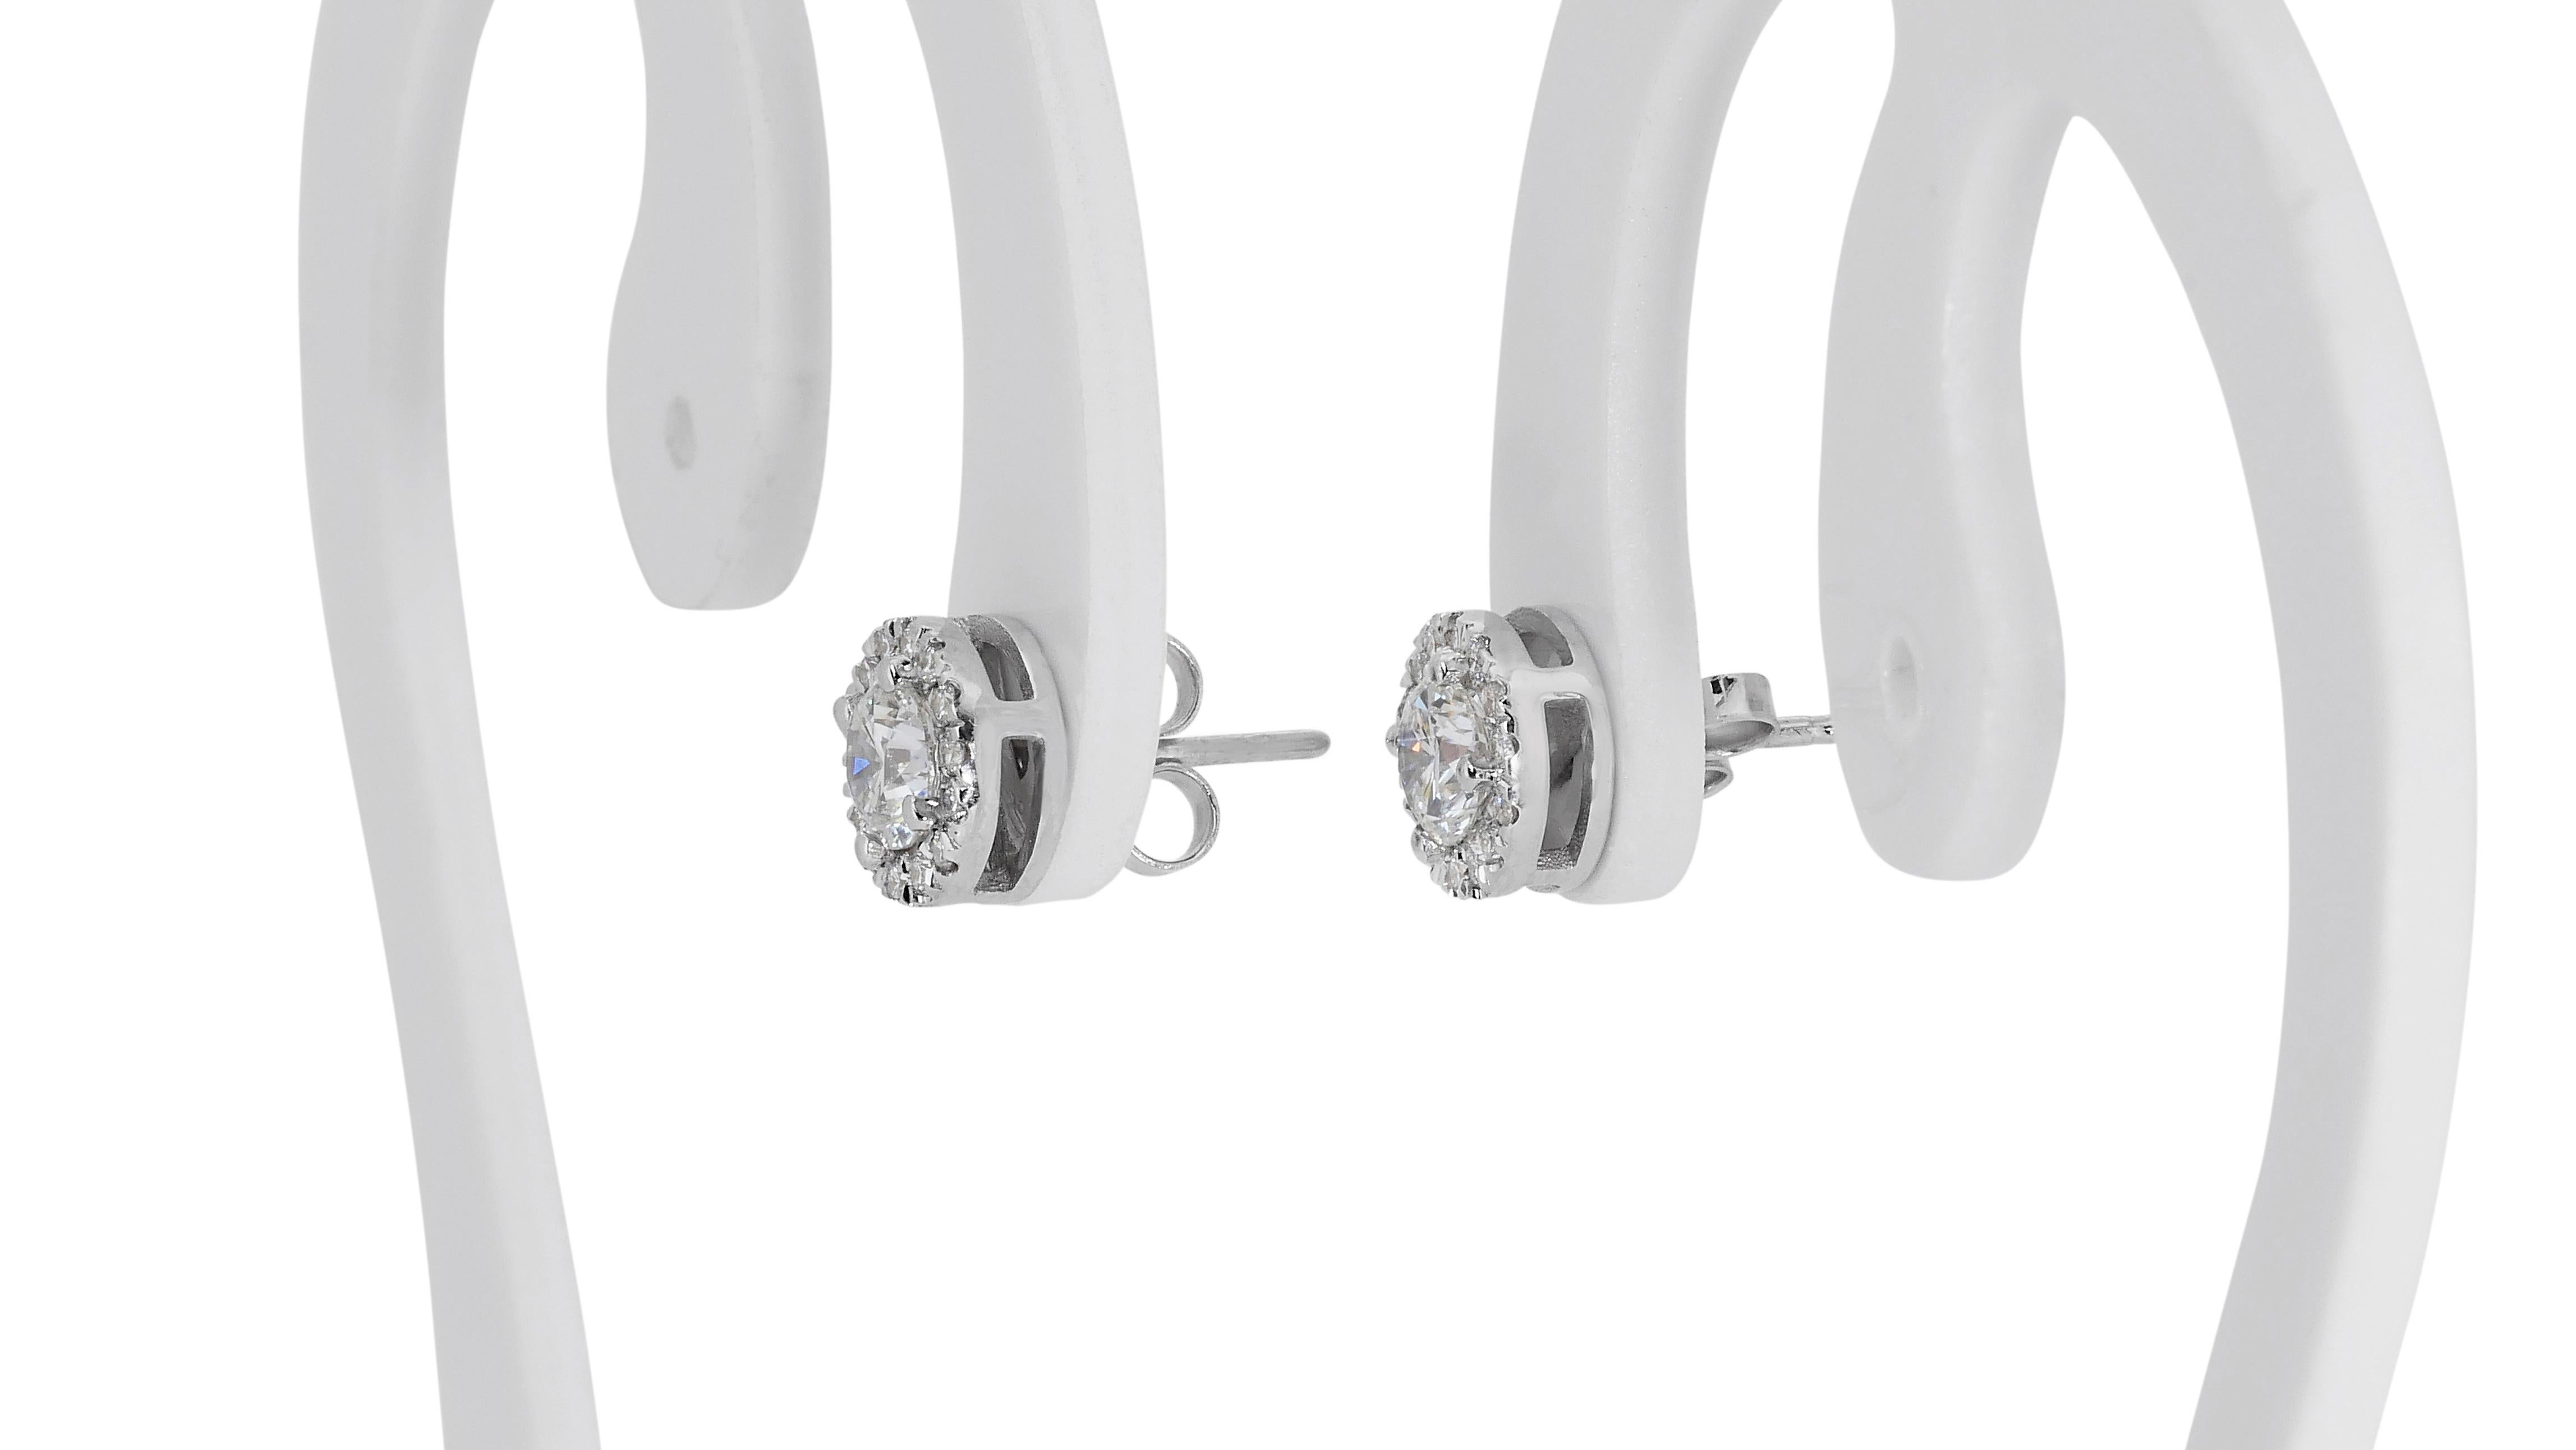 Glamorous 18k White Gold Halo Earrings w/ 1.05 Carat Natural Diamonds GIA Cert For Sale 2